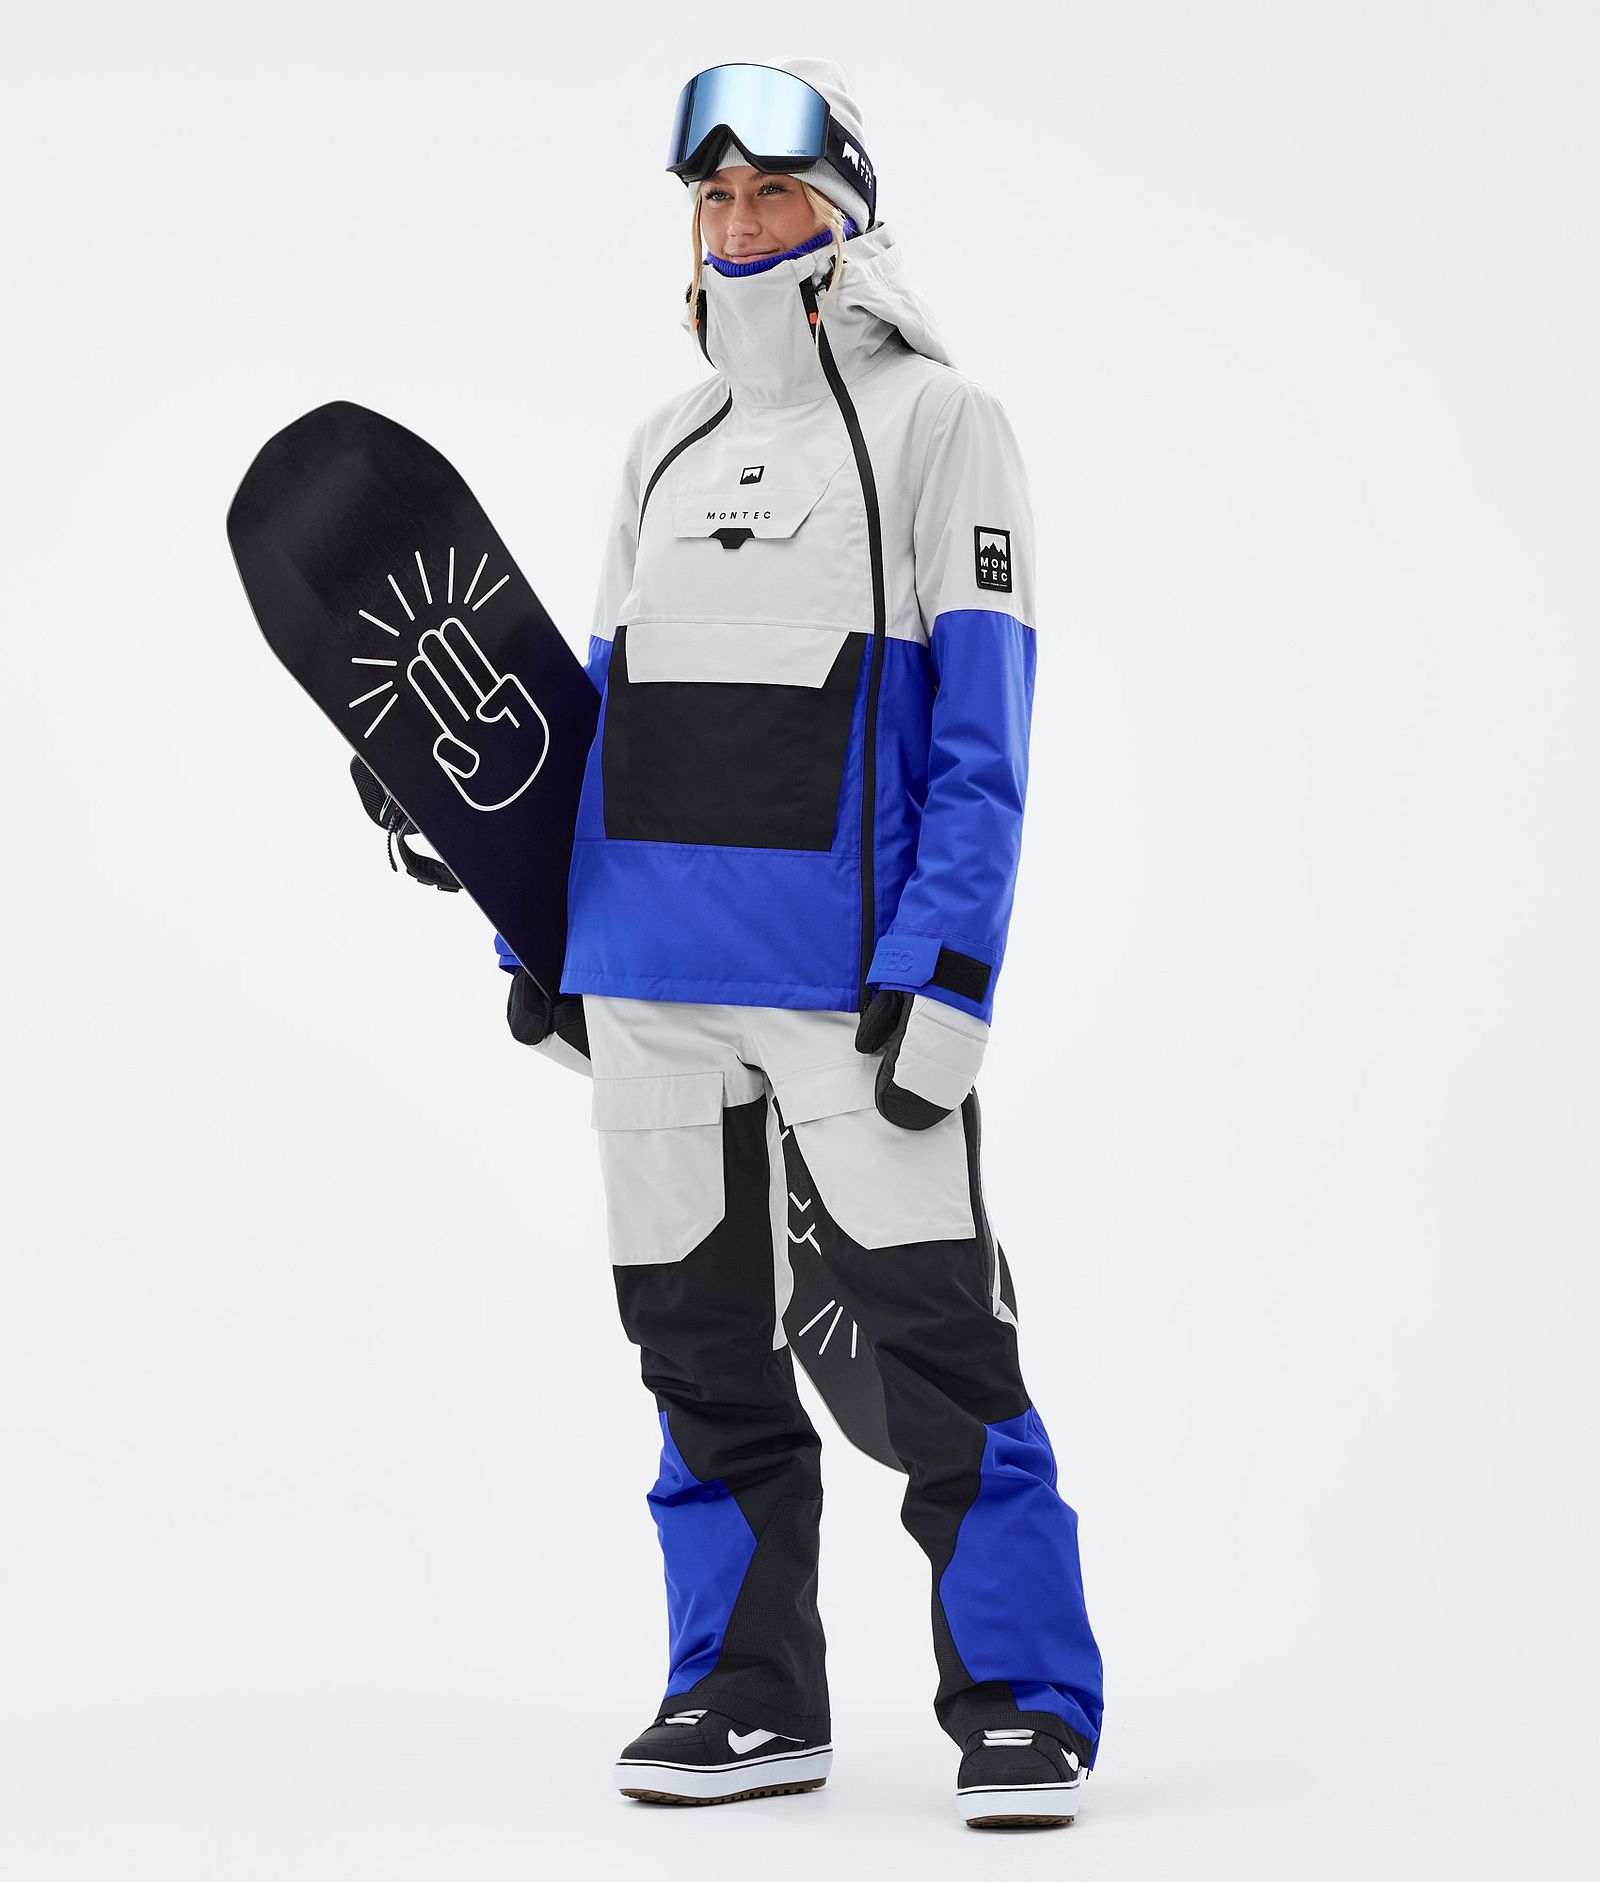 Montec Doom W Chaqueta Snowboard Mujer Light Grey/Black/Cobalt Blue